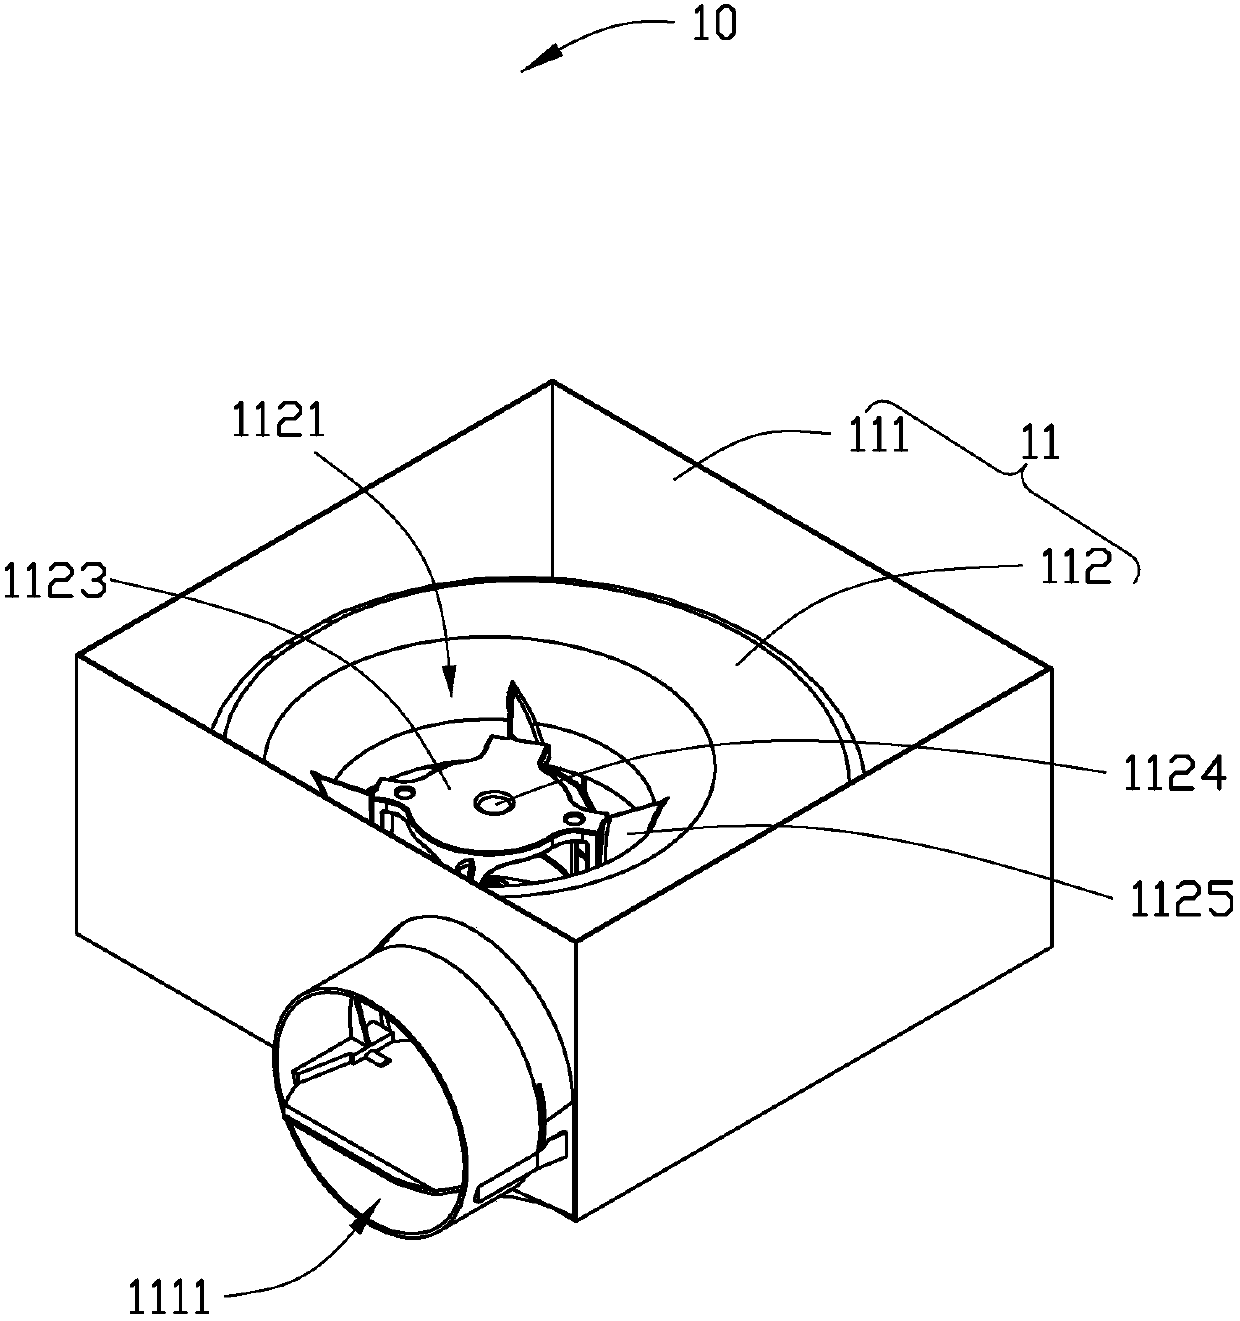 Centrifugal fluid equipment and centrifugal impeller used by centrifugal fluid equipment